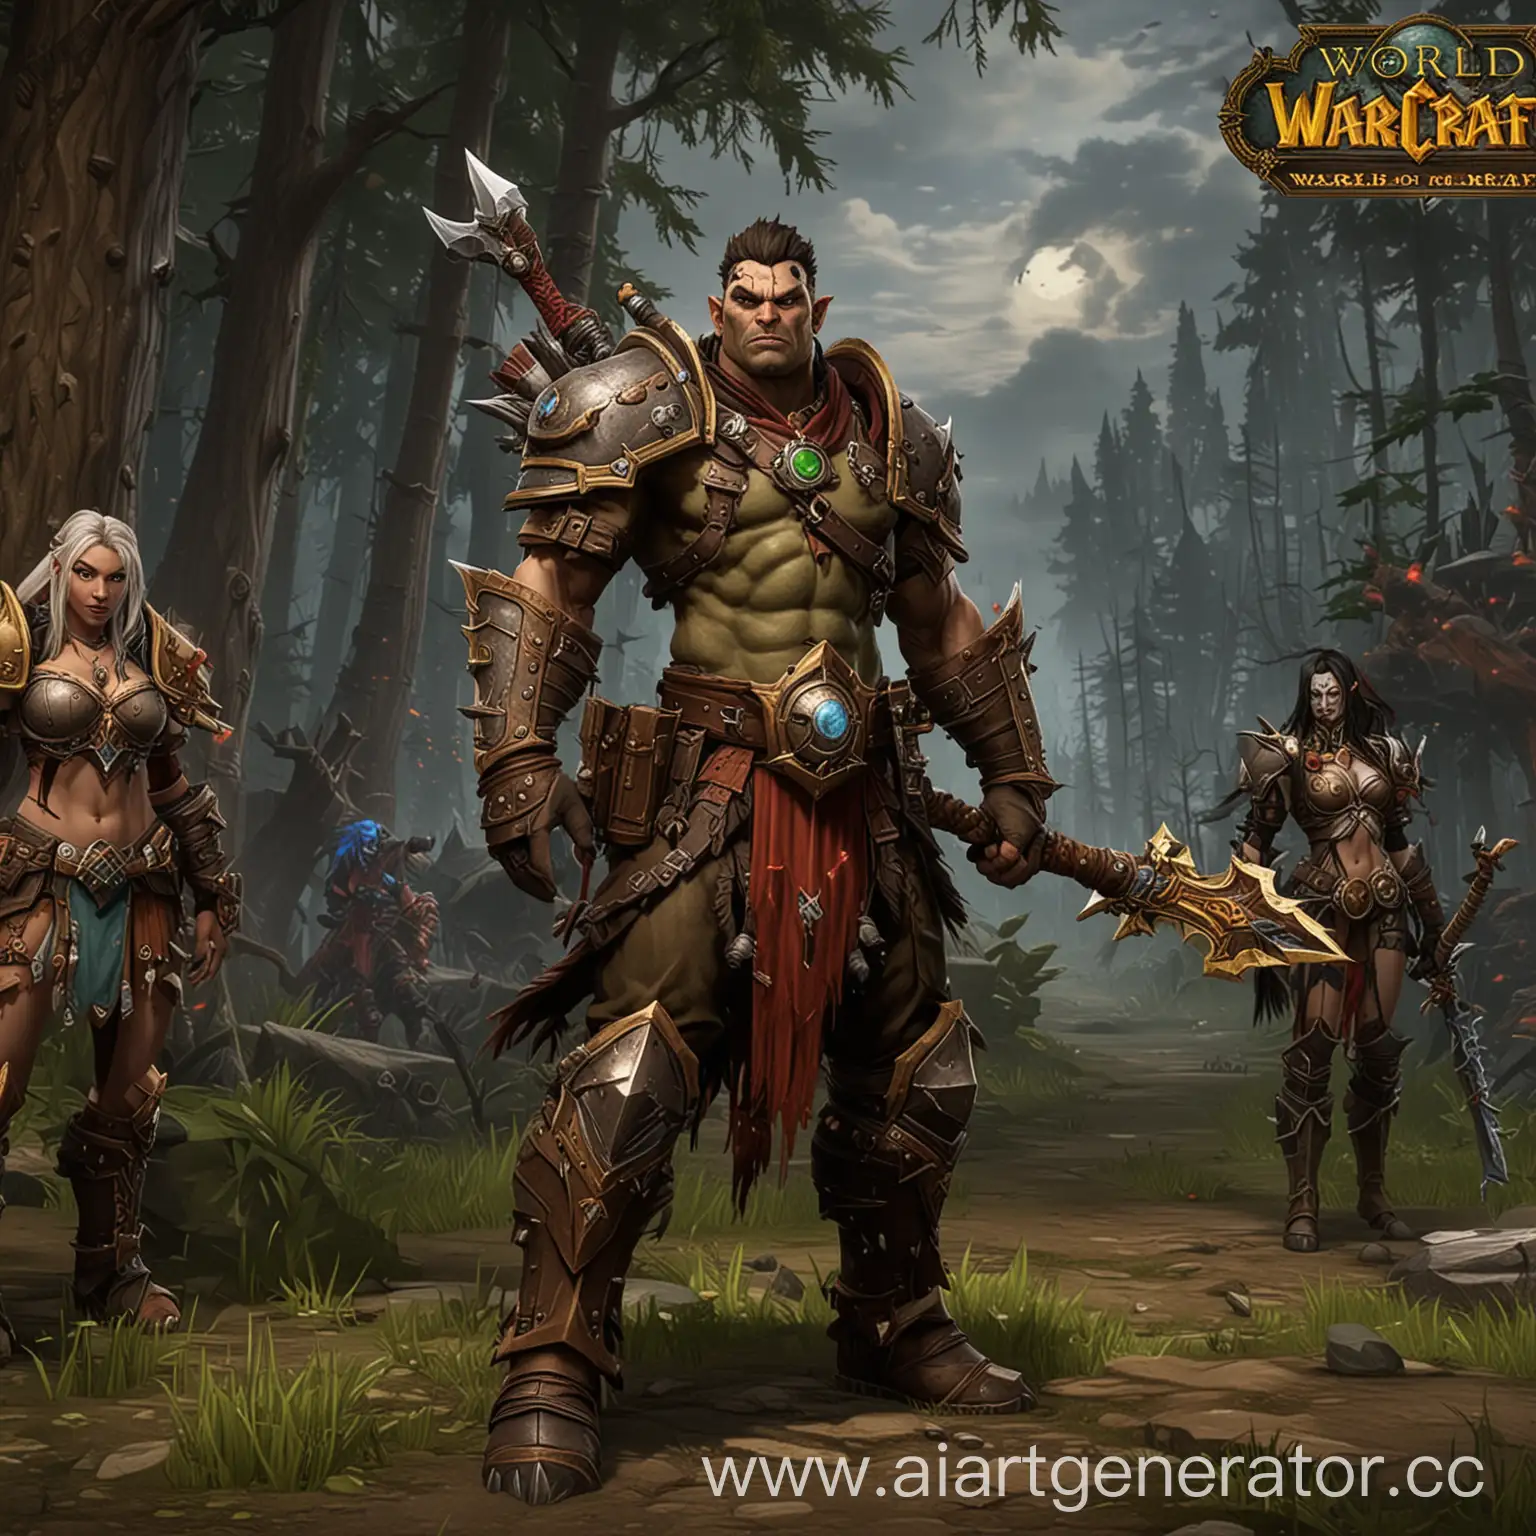 Hunter-PvP-Battle-in-World-of-Warcraft-Arena